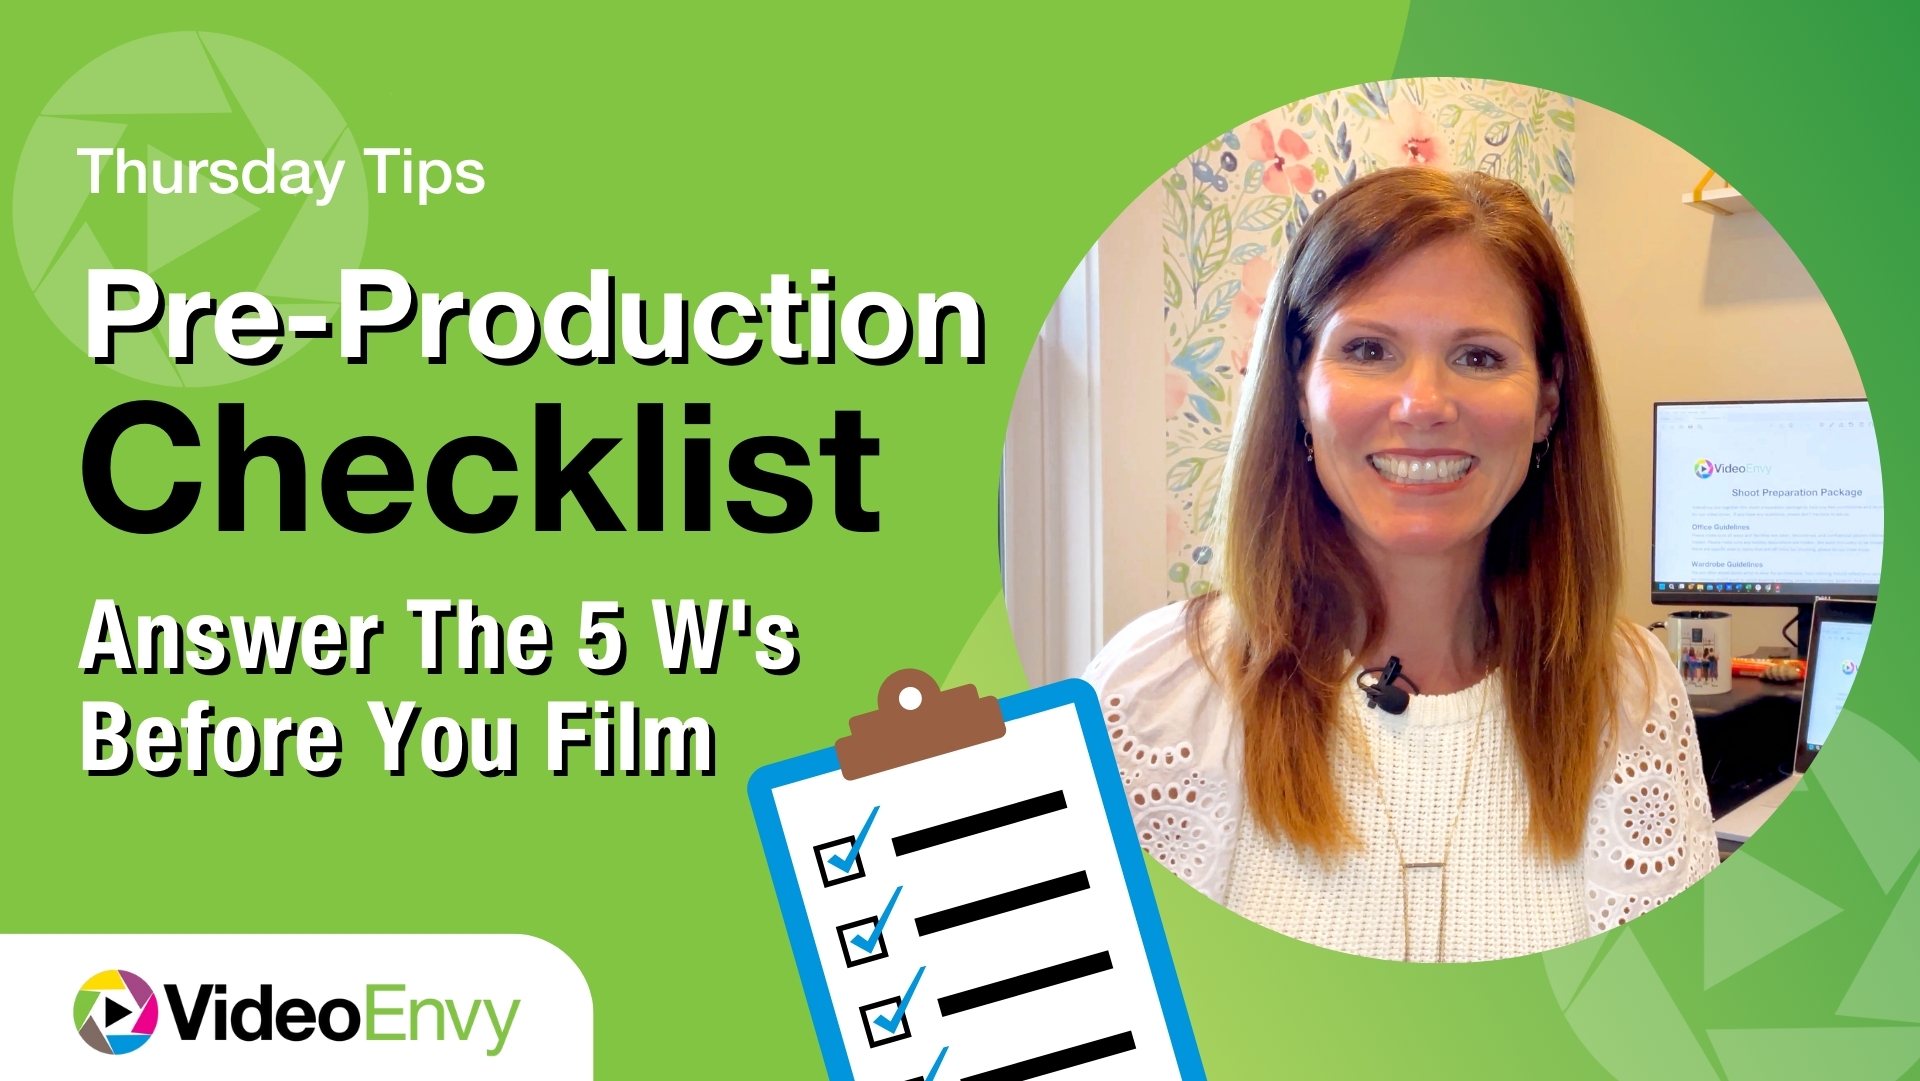 Thursday Tips: Pre-Production Checklist